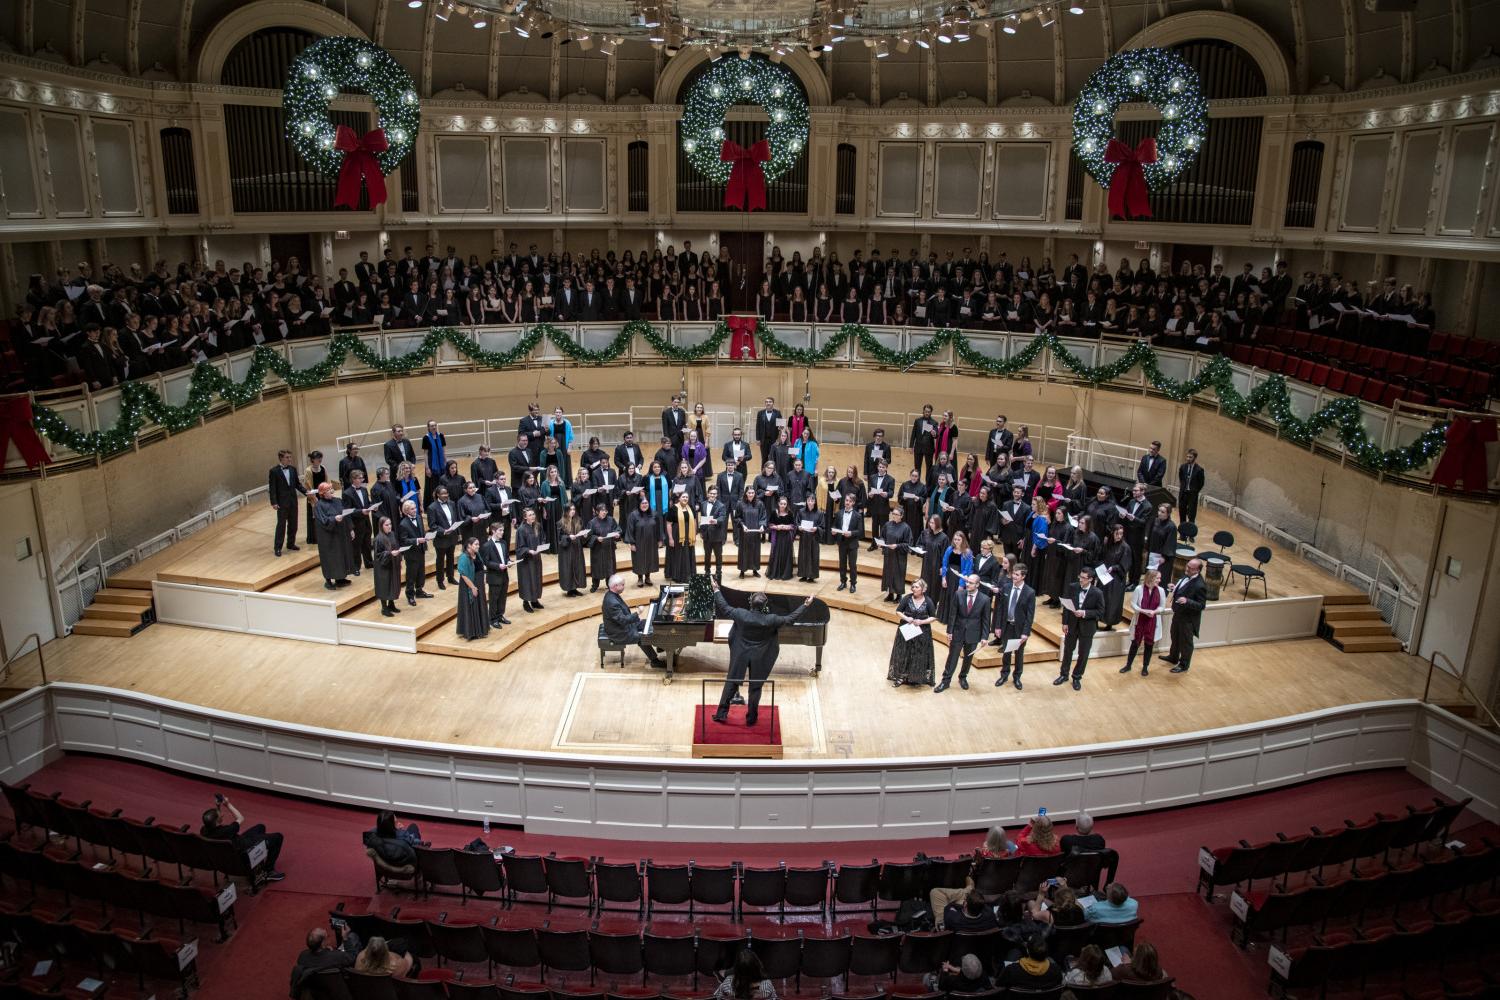 The <a href='http://news.plunkocity.com'>全球十大赌钱排行app</a> Choir performs in the Chicago Symphony Hall.